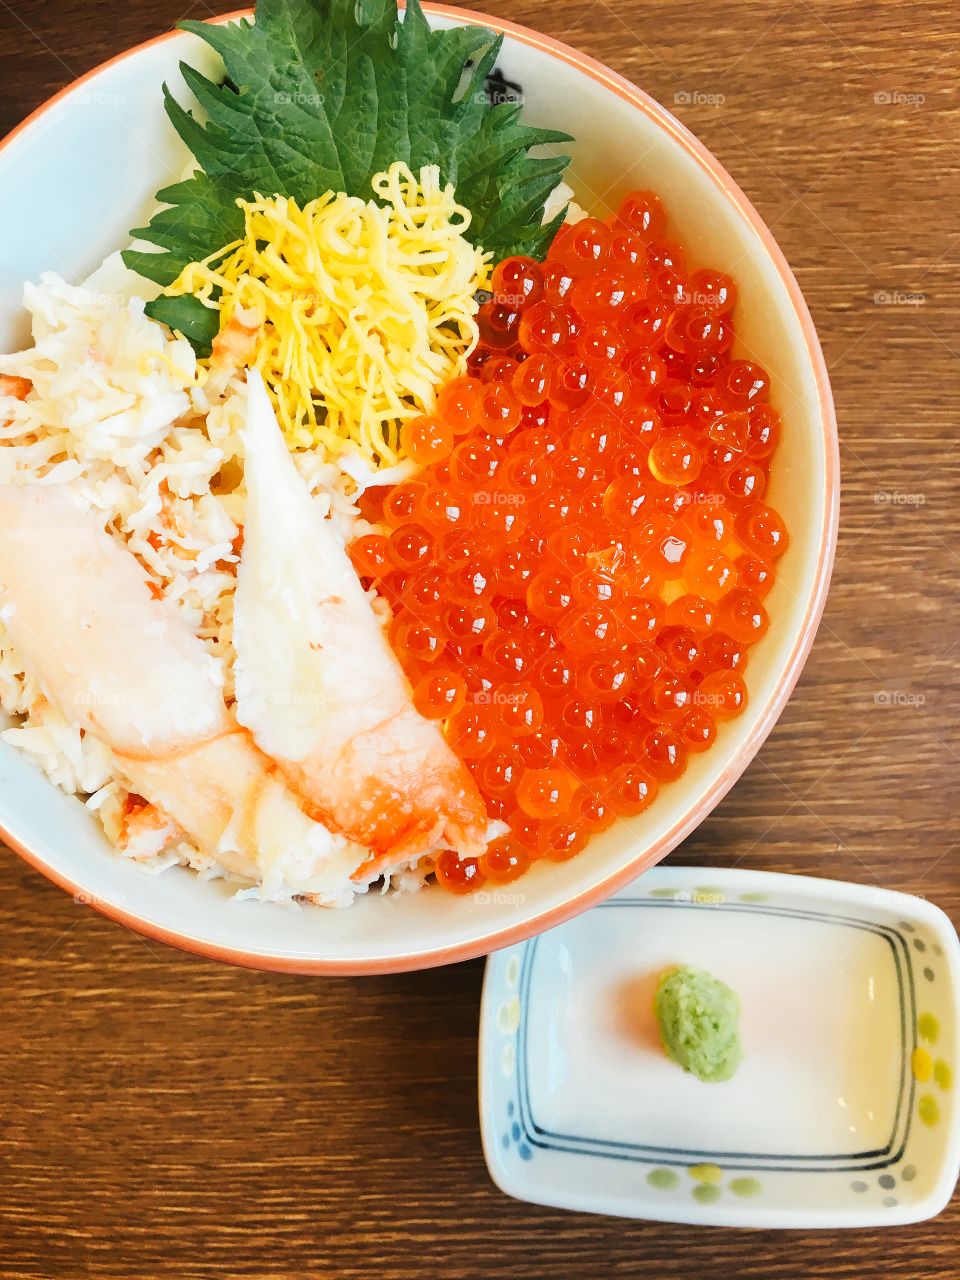 Fresh Salmon egg and king crab sushi japanese food with wasabi

